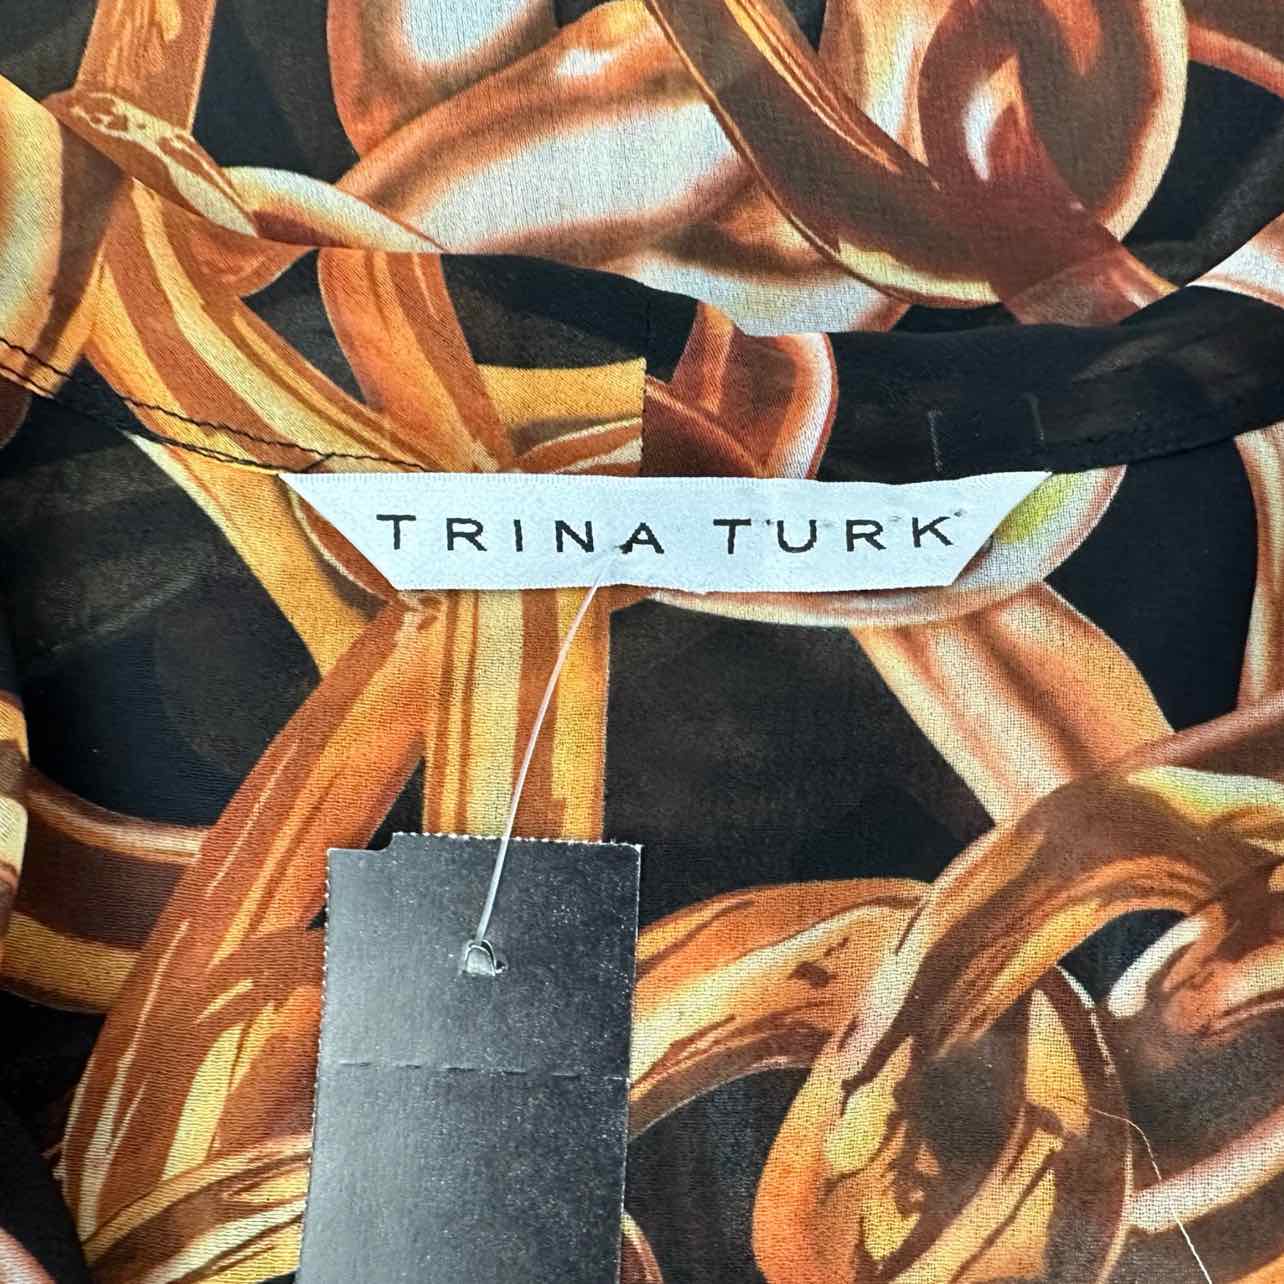 TRINA TURK Black Chain Print Sleeveless Top Size S